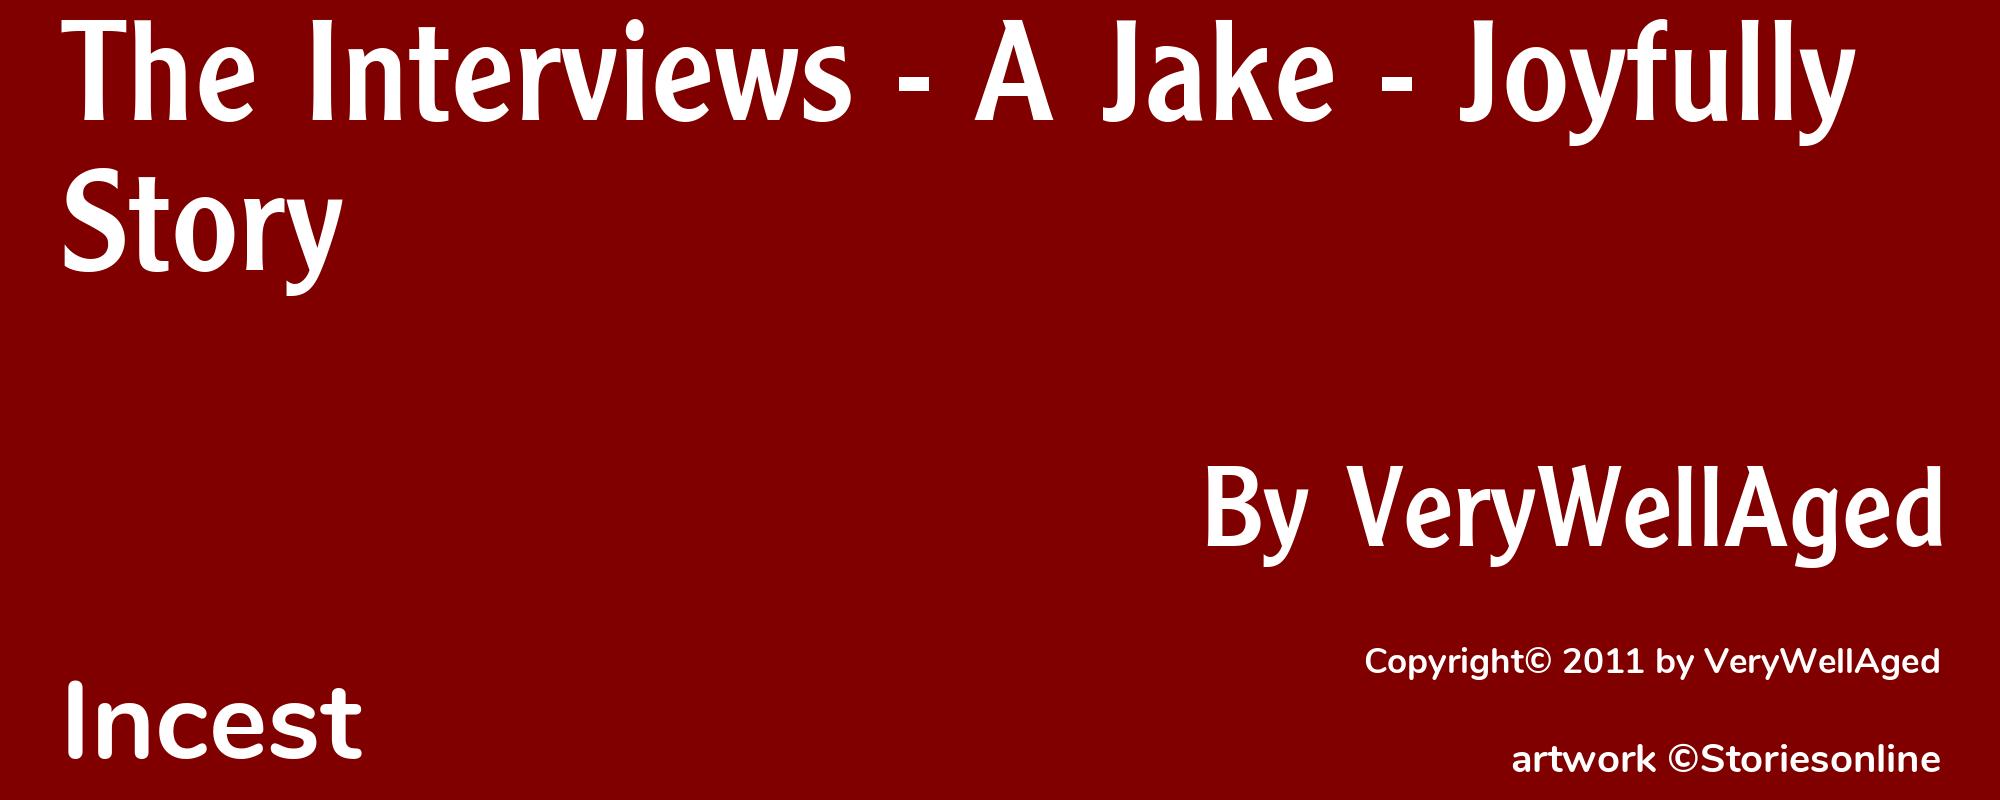 The Interviews - A Jake - Joyfully Story - Cover